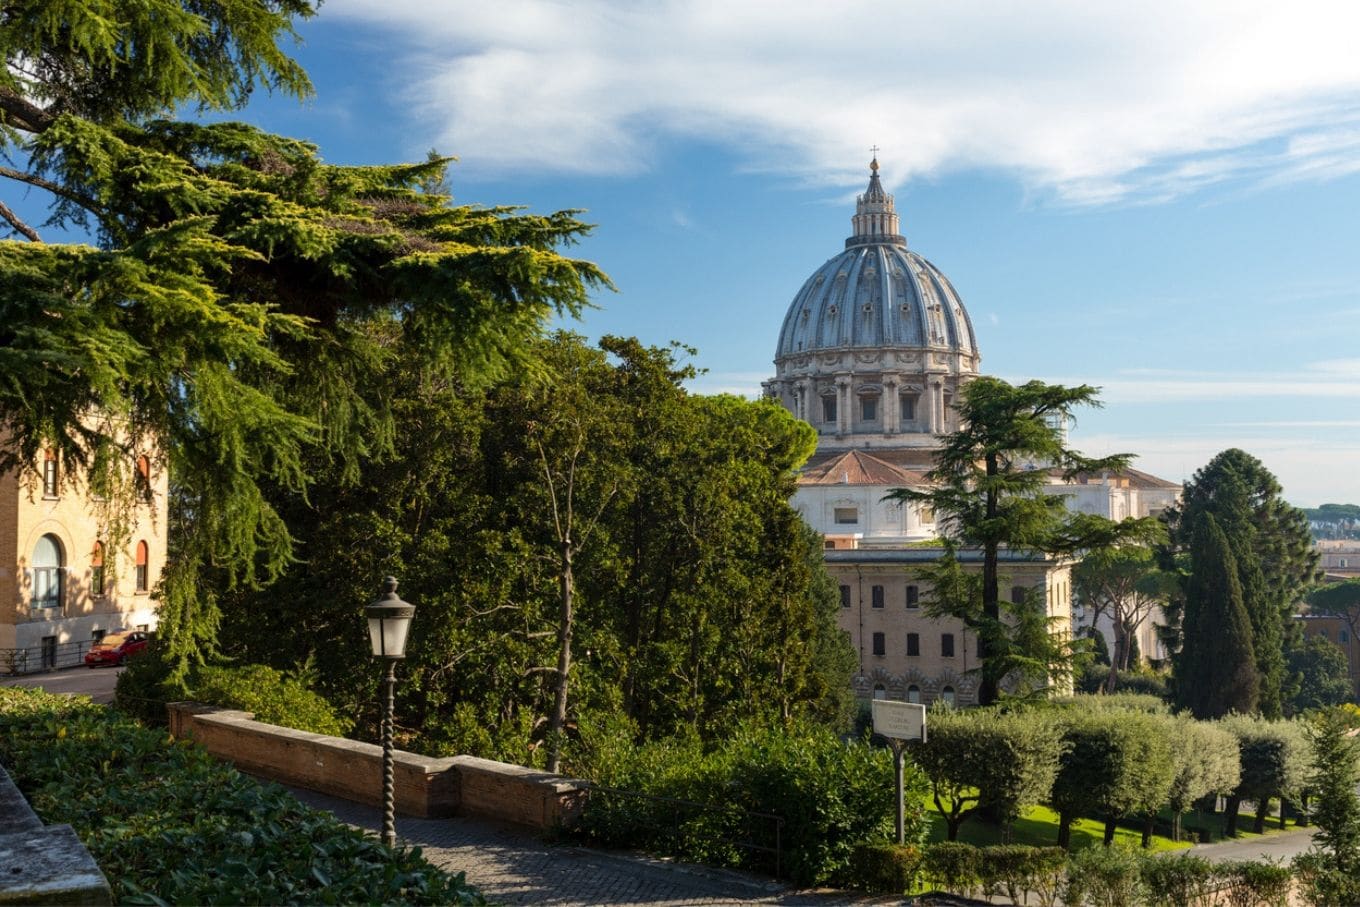 20 Lugares Secretos de Roma  Roma lugares turisticos, Lugares